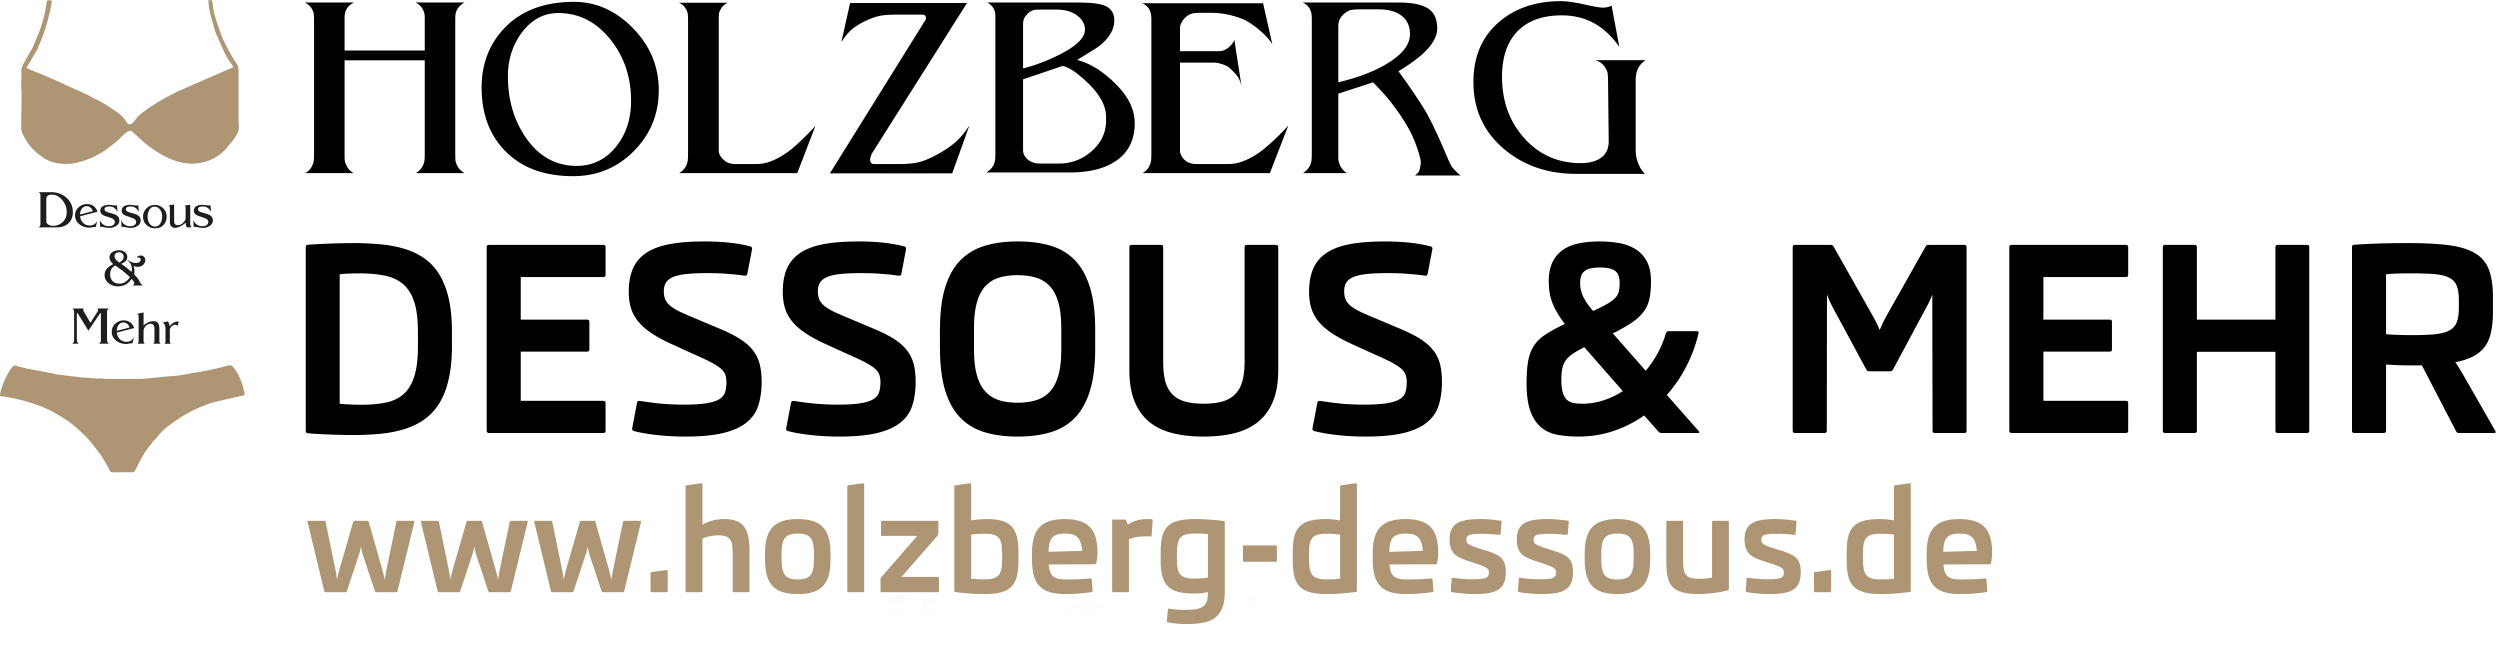 Holzberg Dessous & Mehr